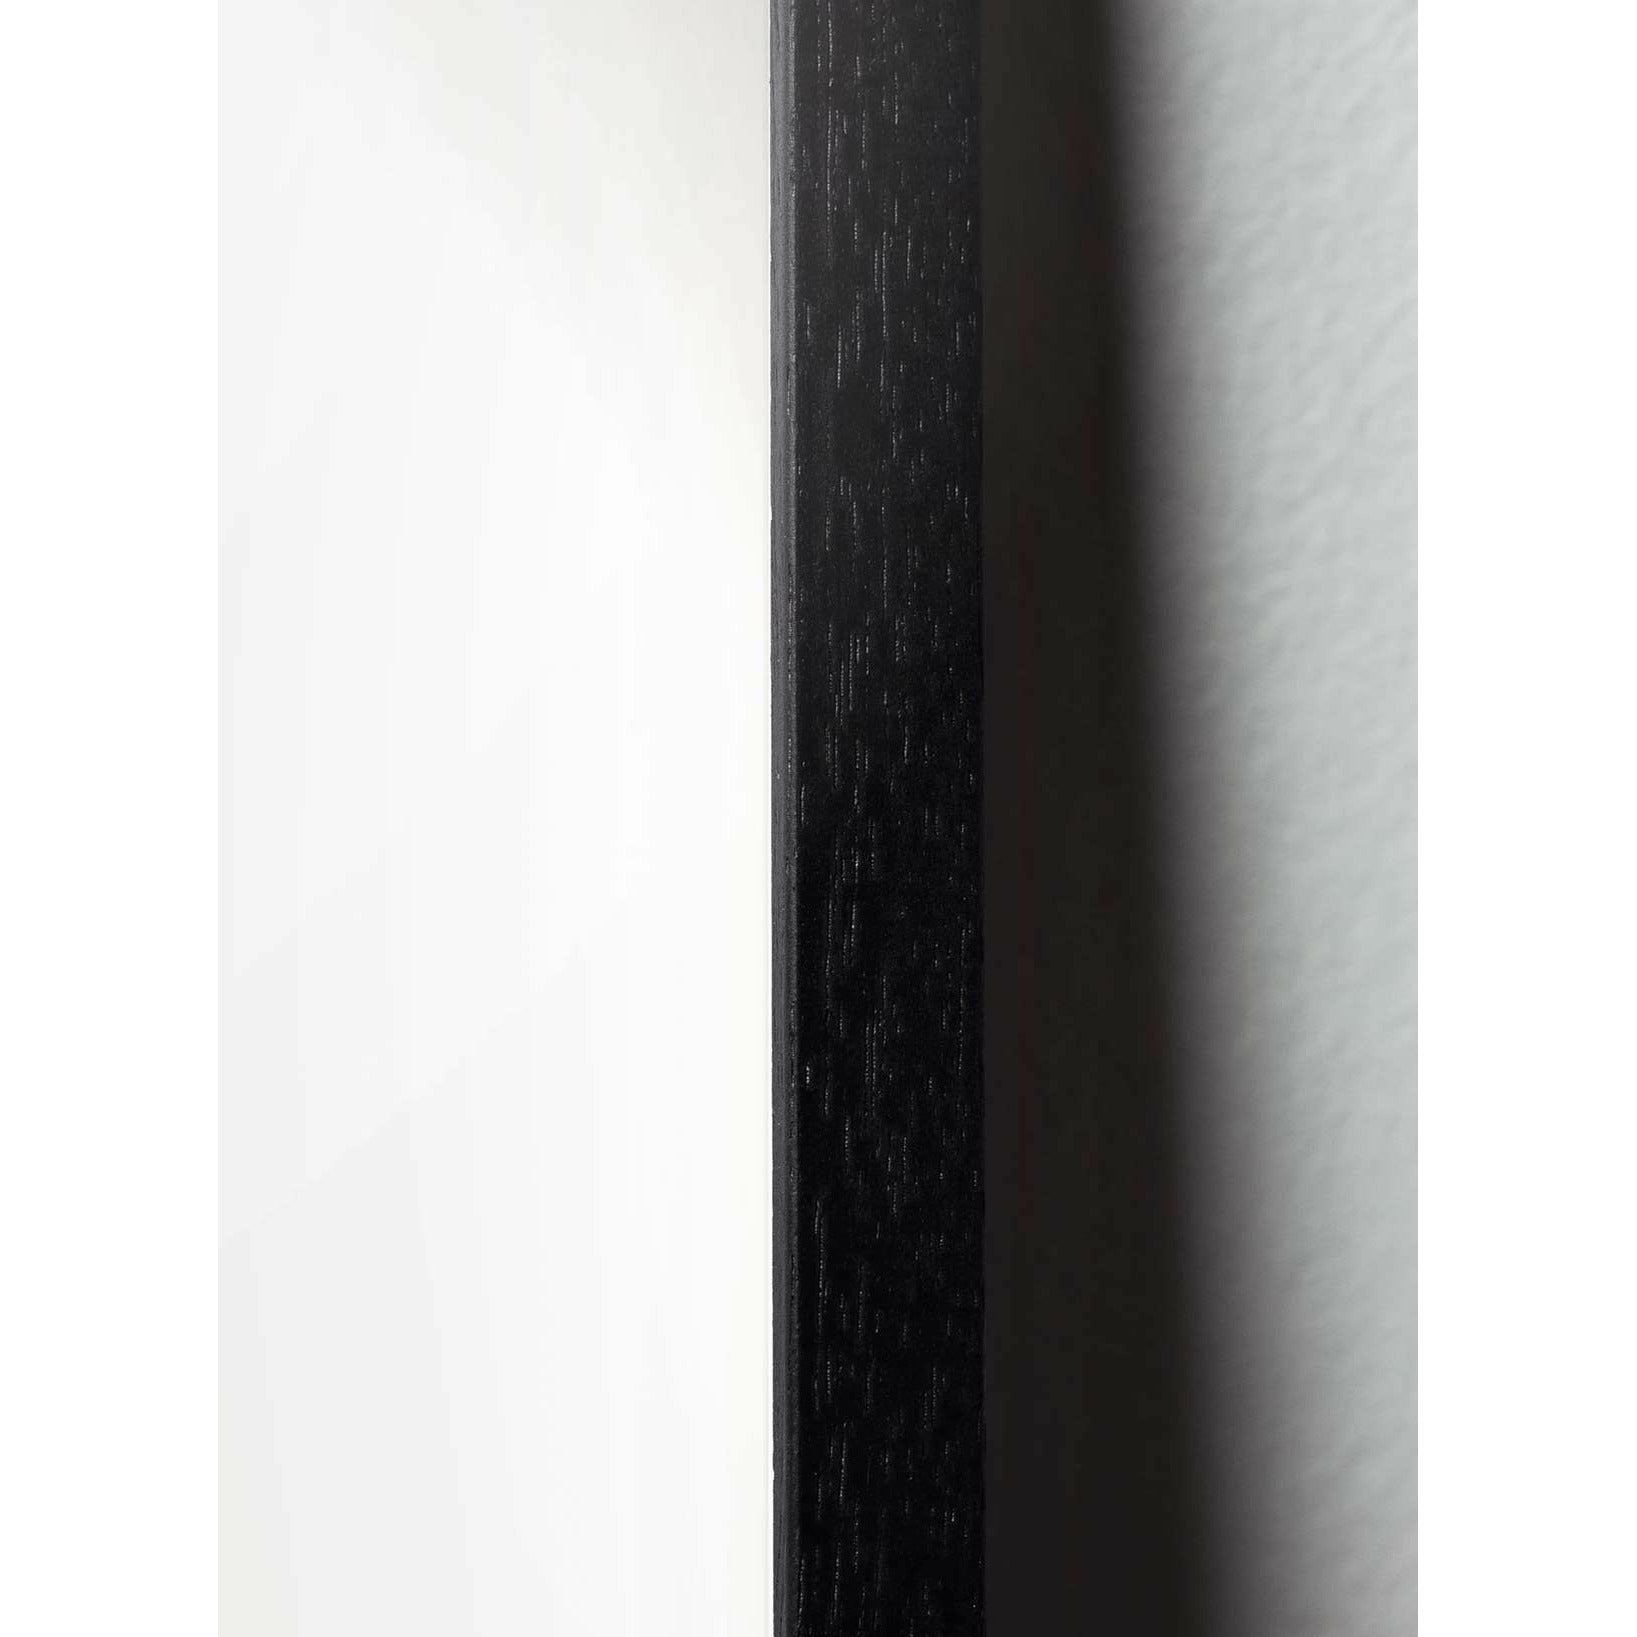 Brainchild Släpp klassisk affisch, ram i svart -målat trä 50x70 cm, svart bakgrund